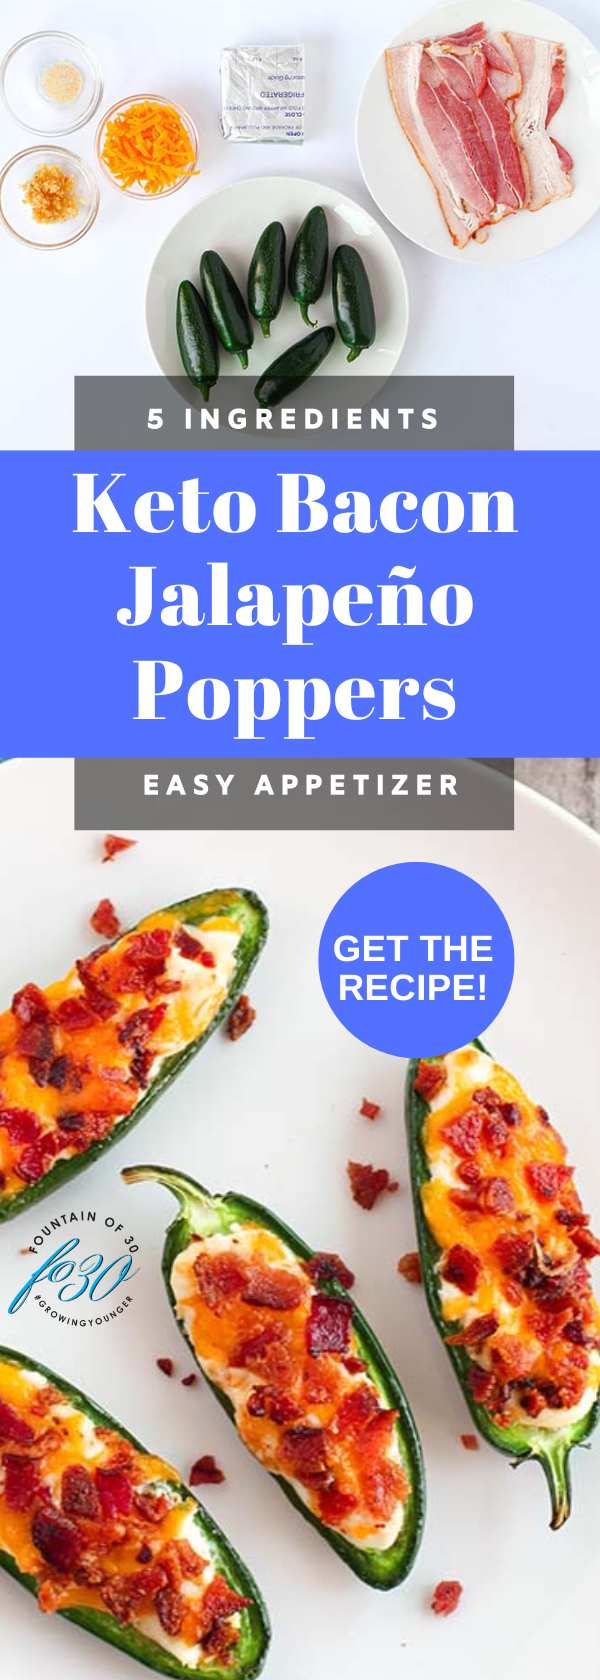 jalapeno poppers recipe 5 ingredients fountainof30